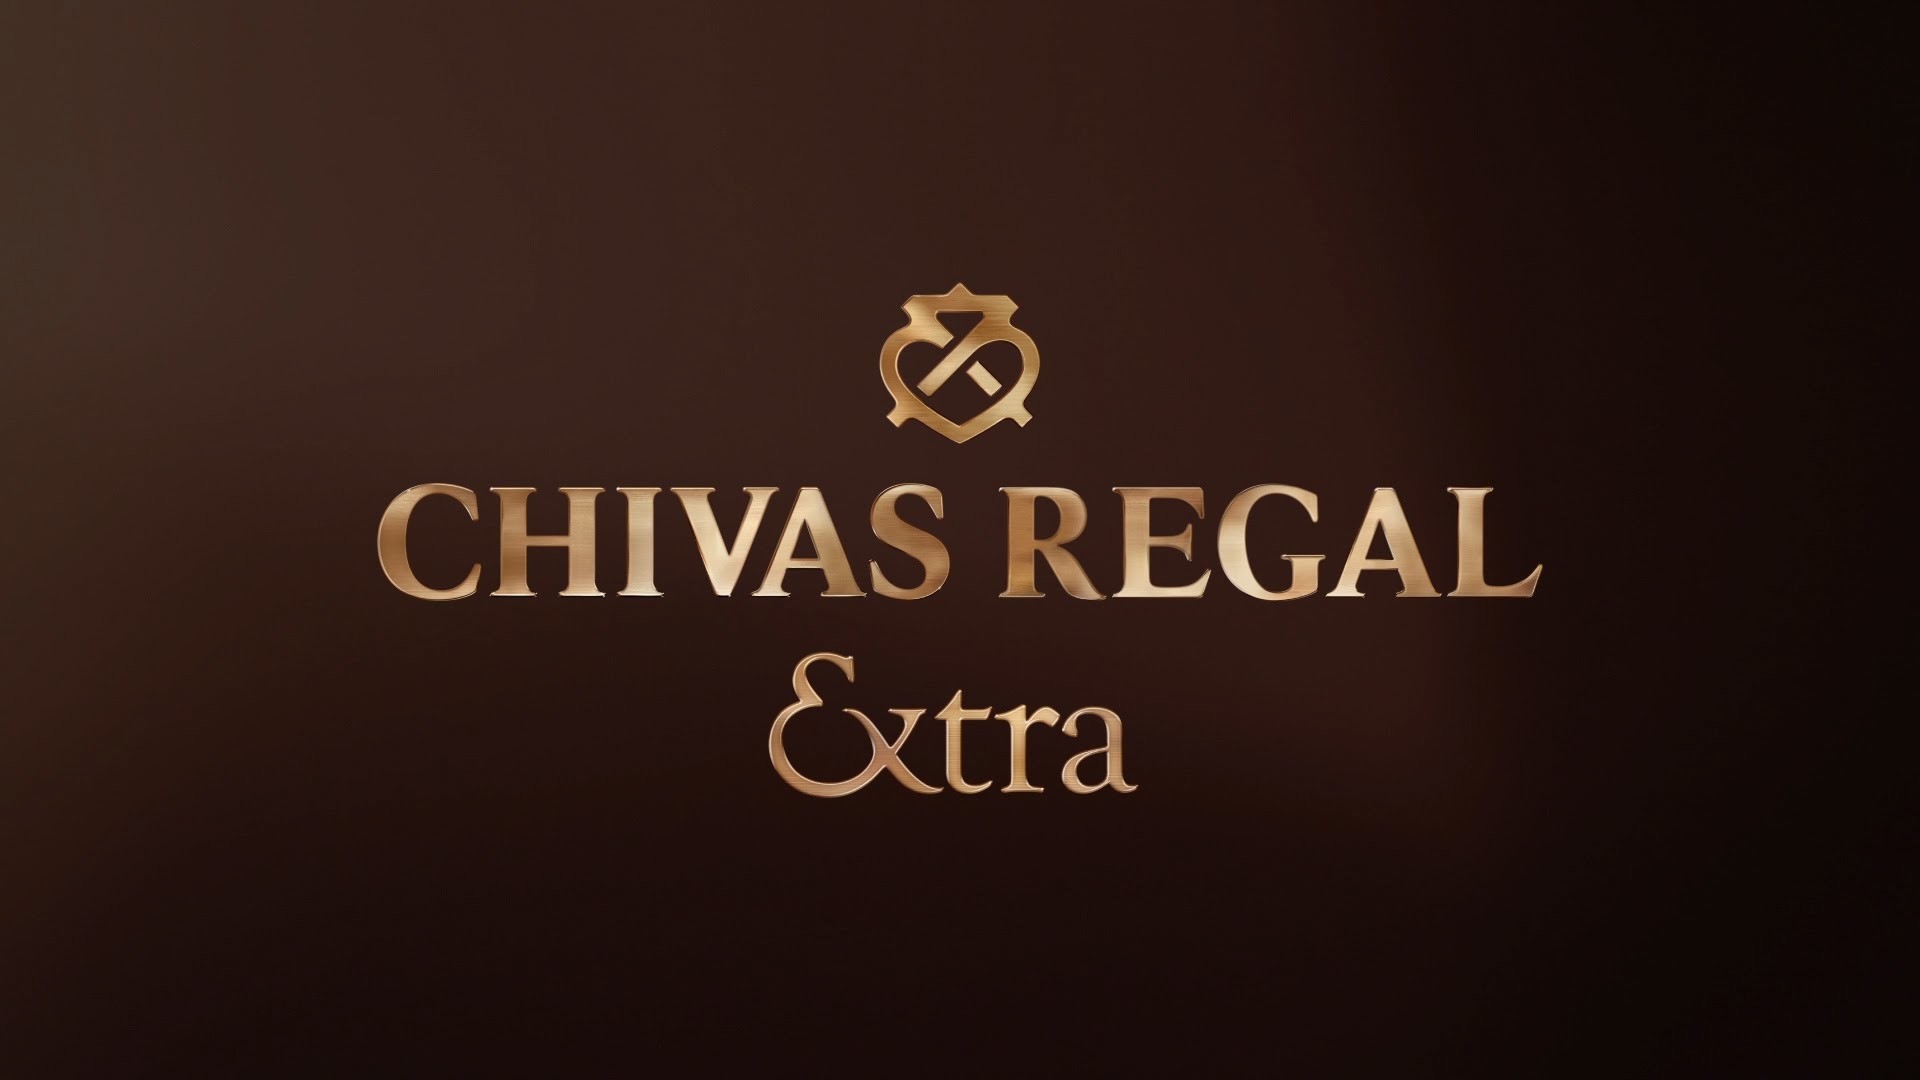 1920x1080 Chivas Regal - Wallpaper iPad | Whiskey | Pinterest | Wallpapers .